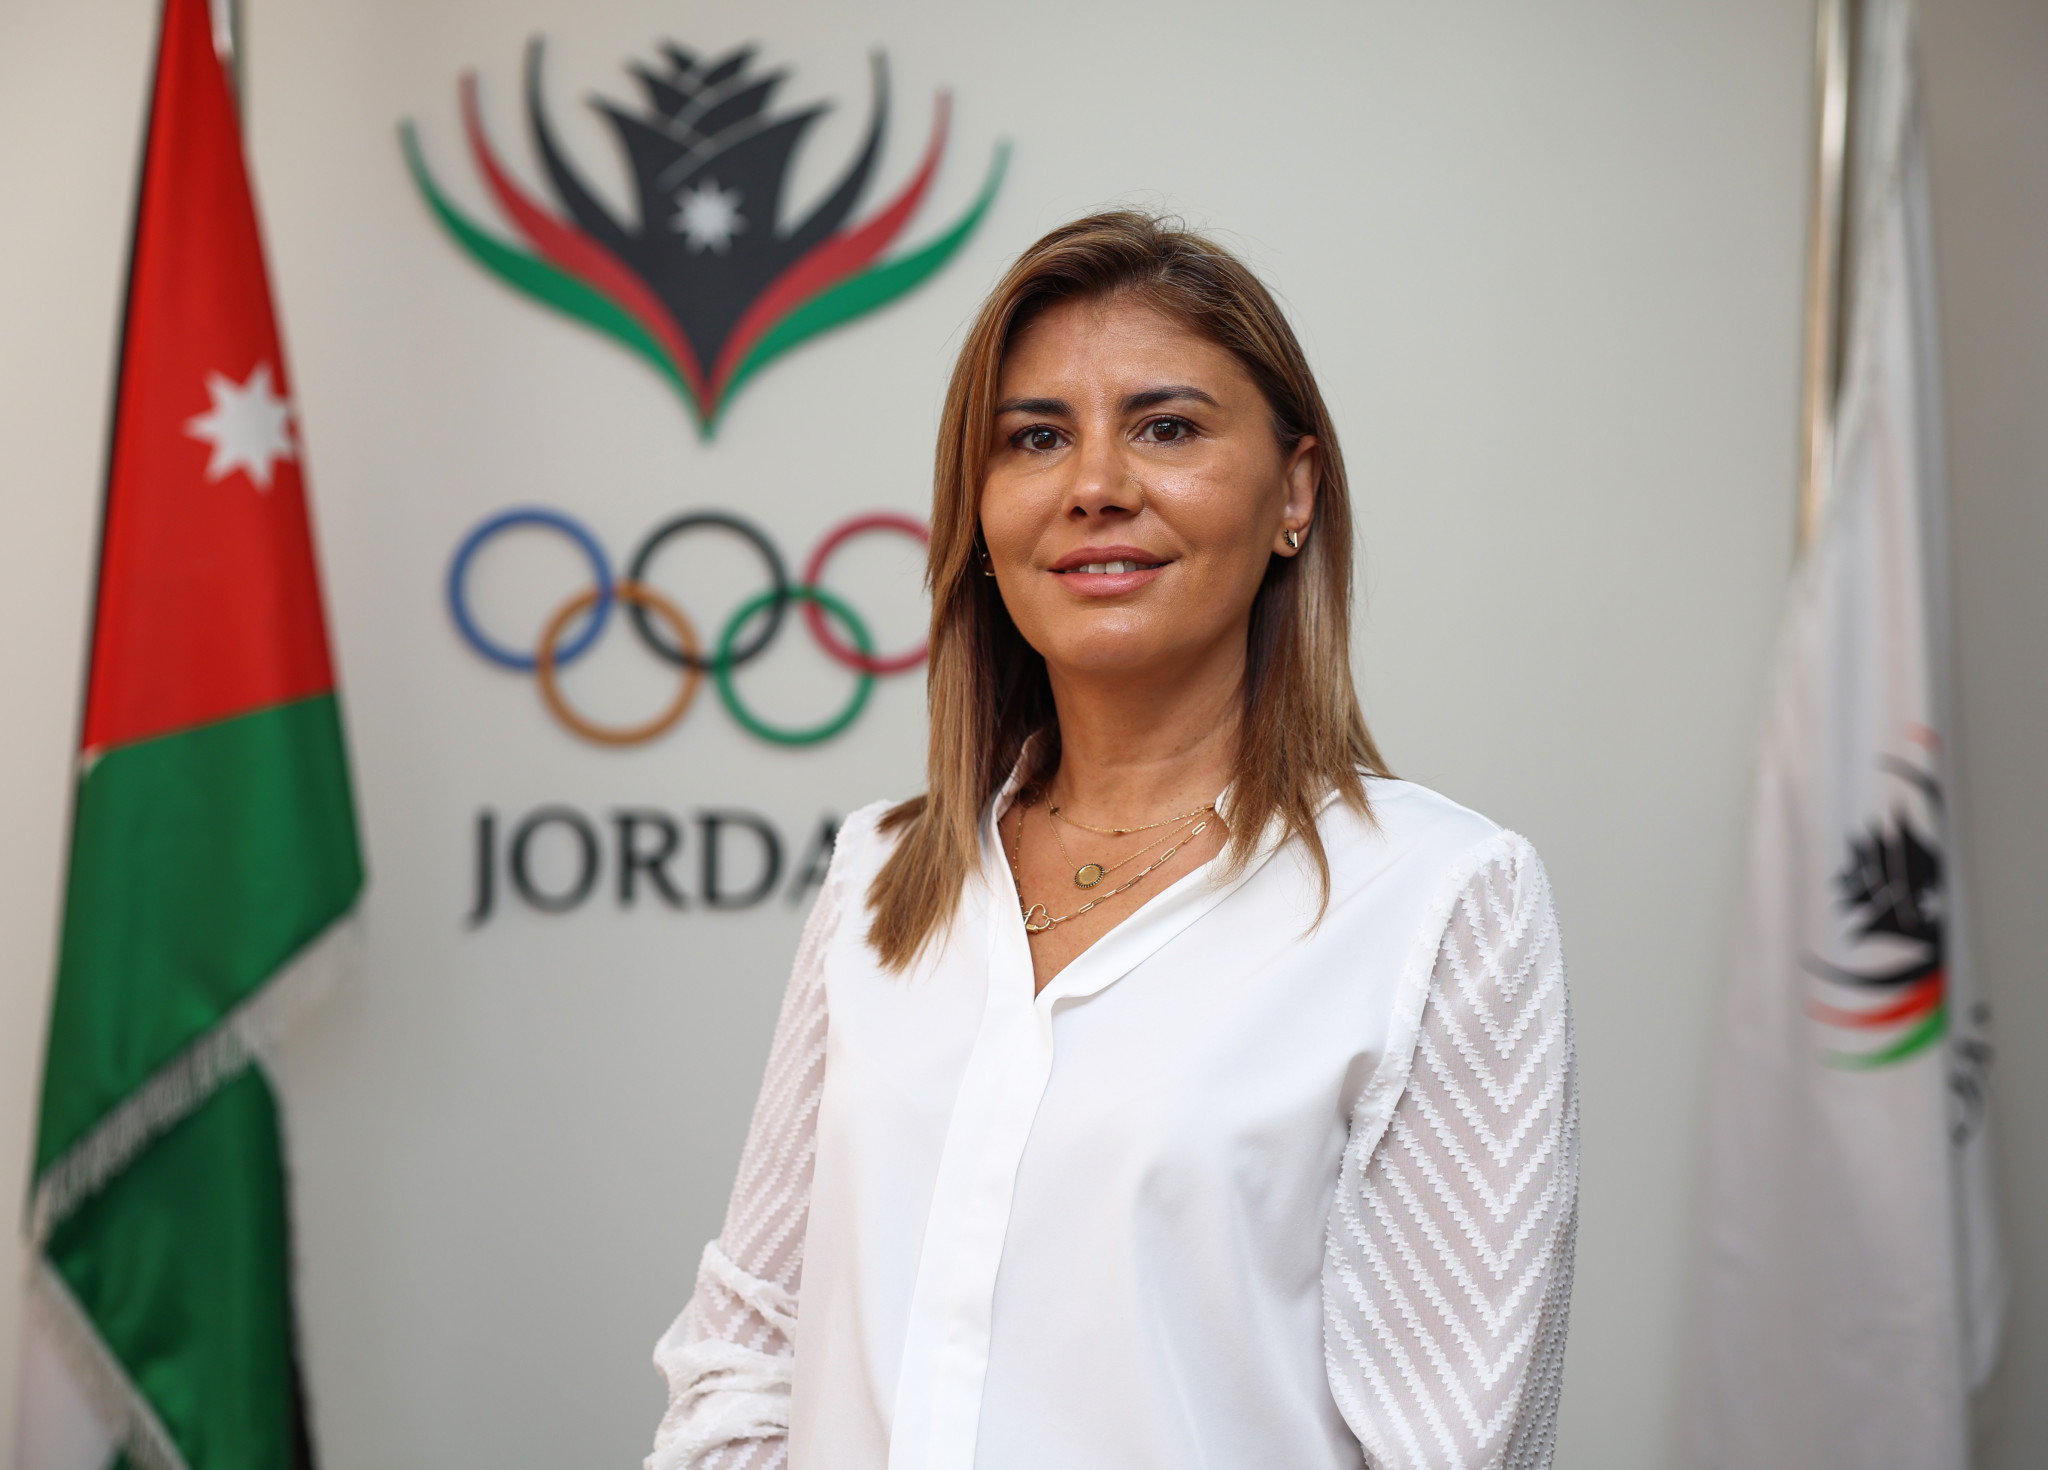 Al-Saeed replaces Majali as Jordan Olympic Committee secretary general